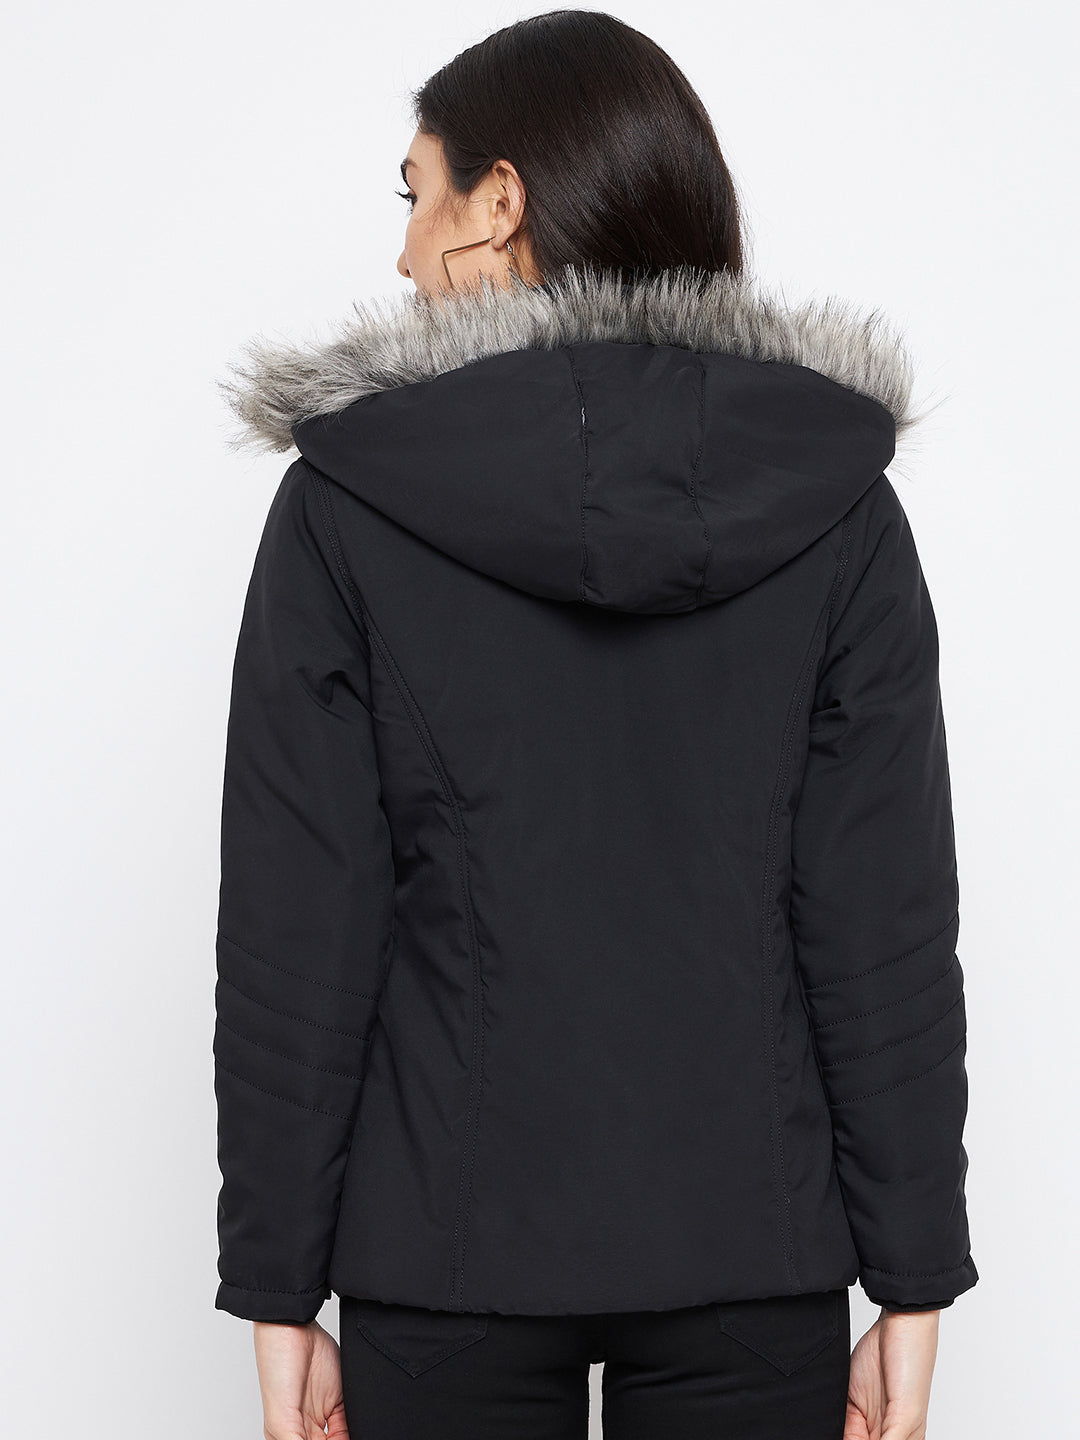 Livfree women Stylish black full zipper hoody Jacket- Black